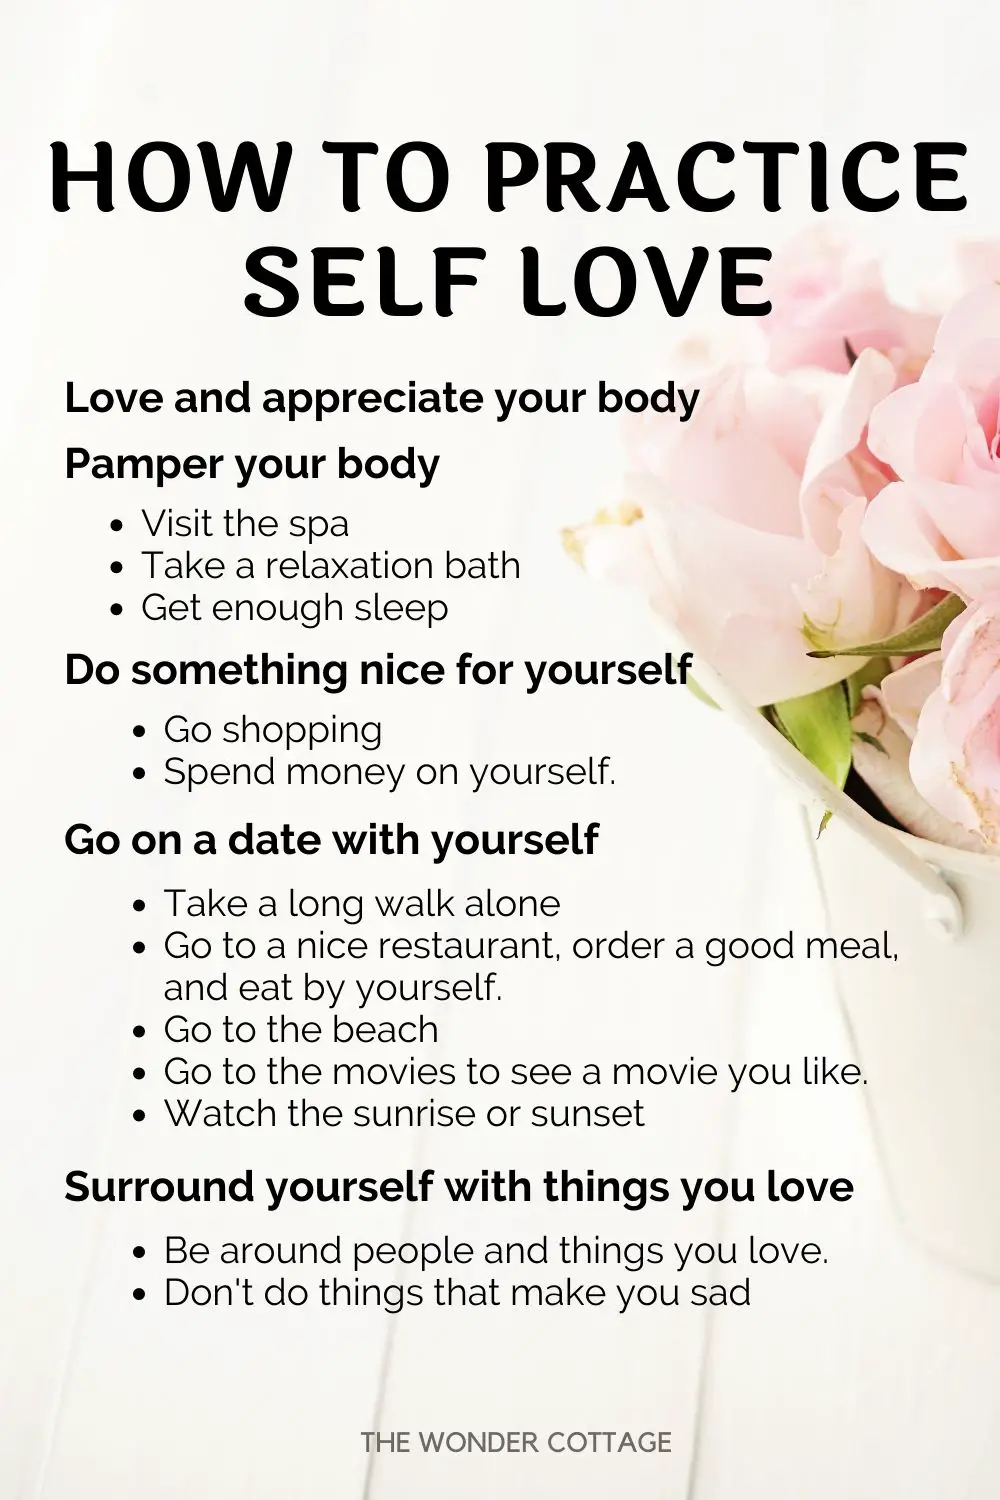 how to practice self-love